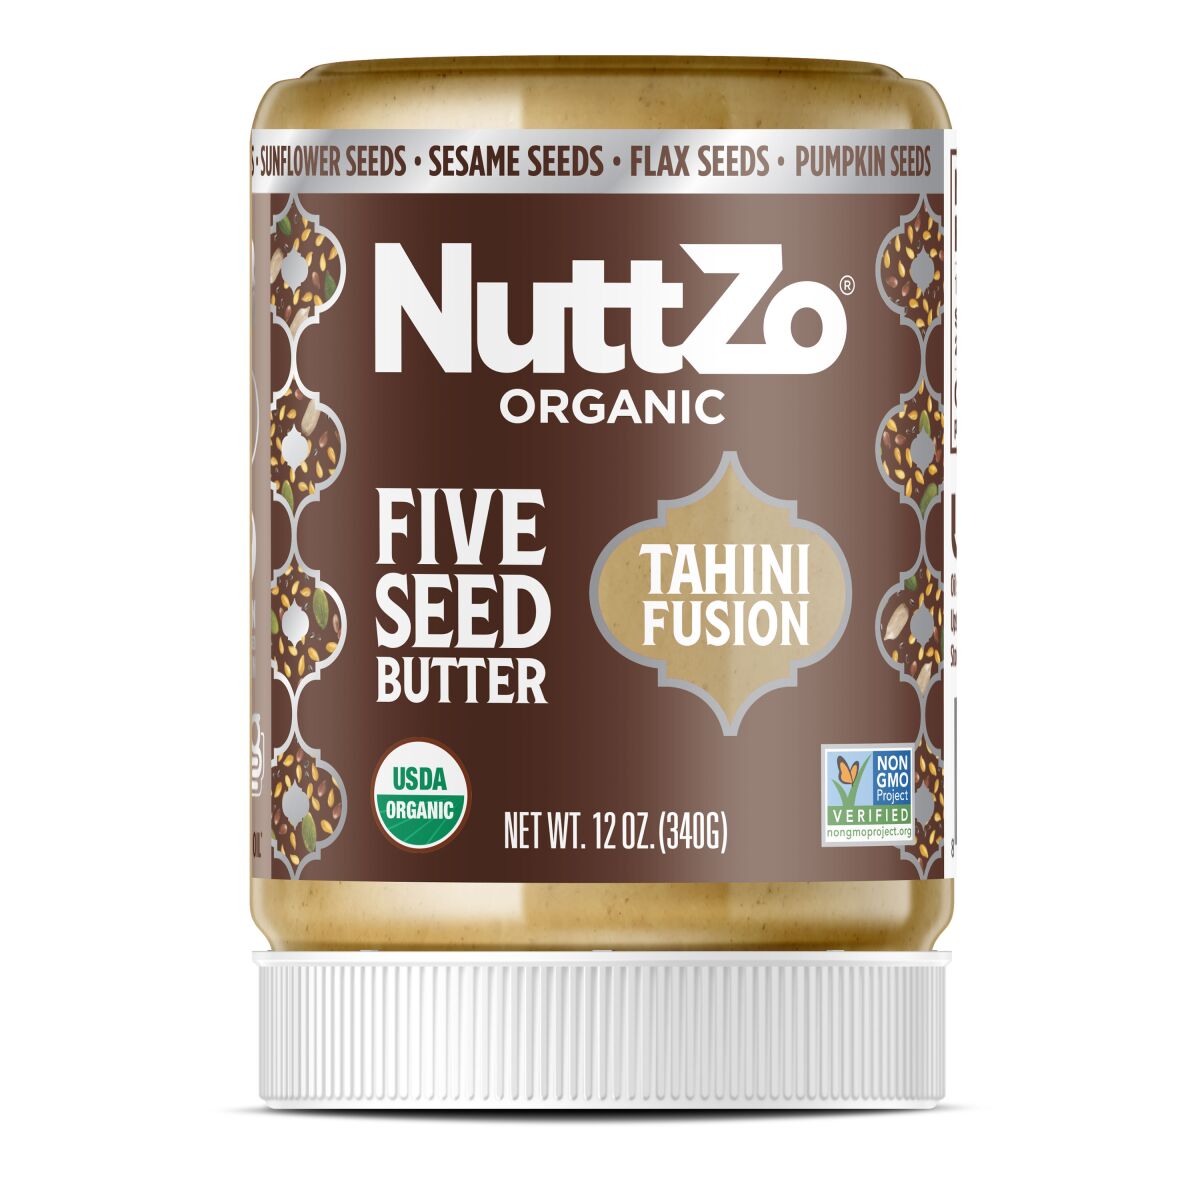 The new NuttZo Five Seed Tahini Fusion.